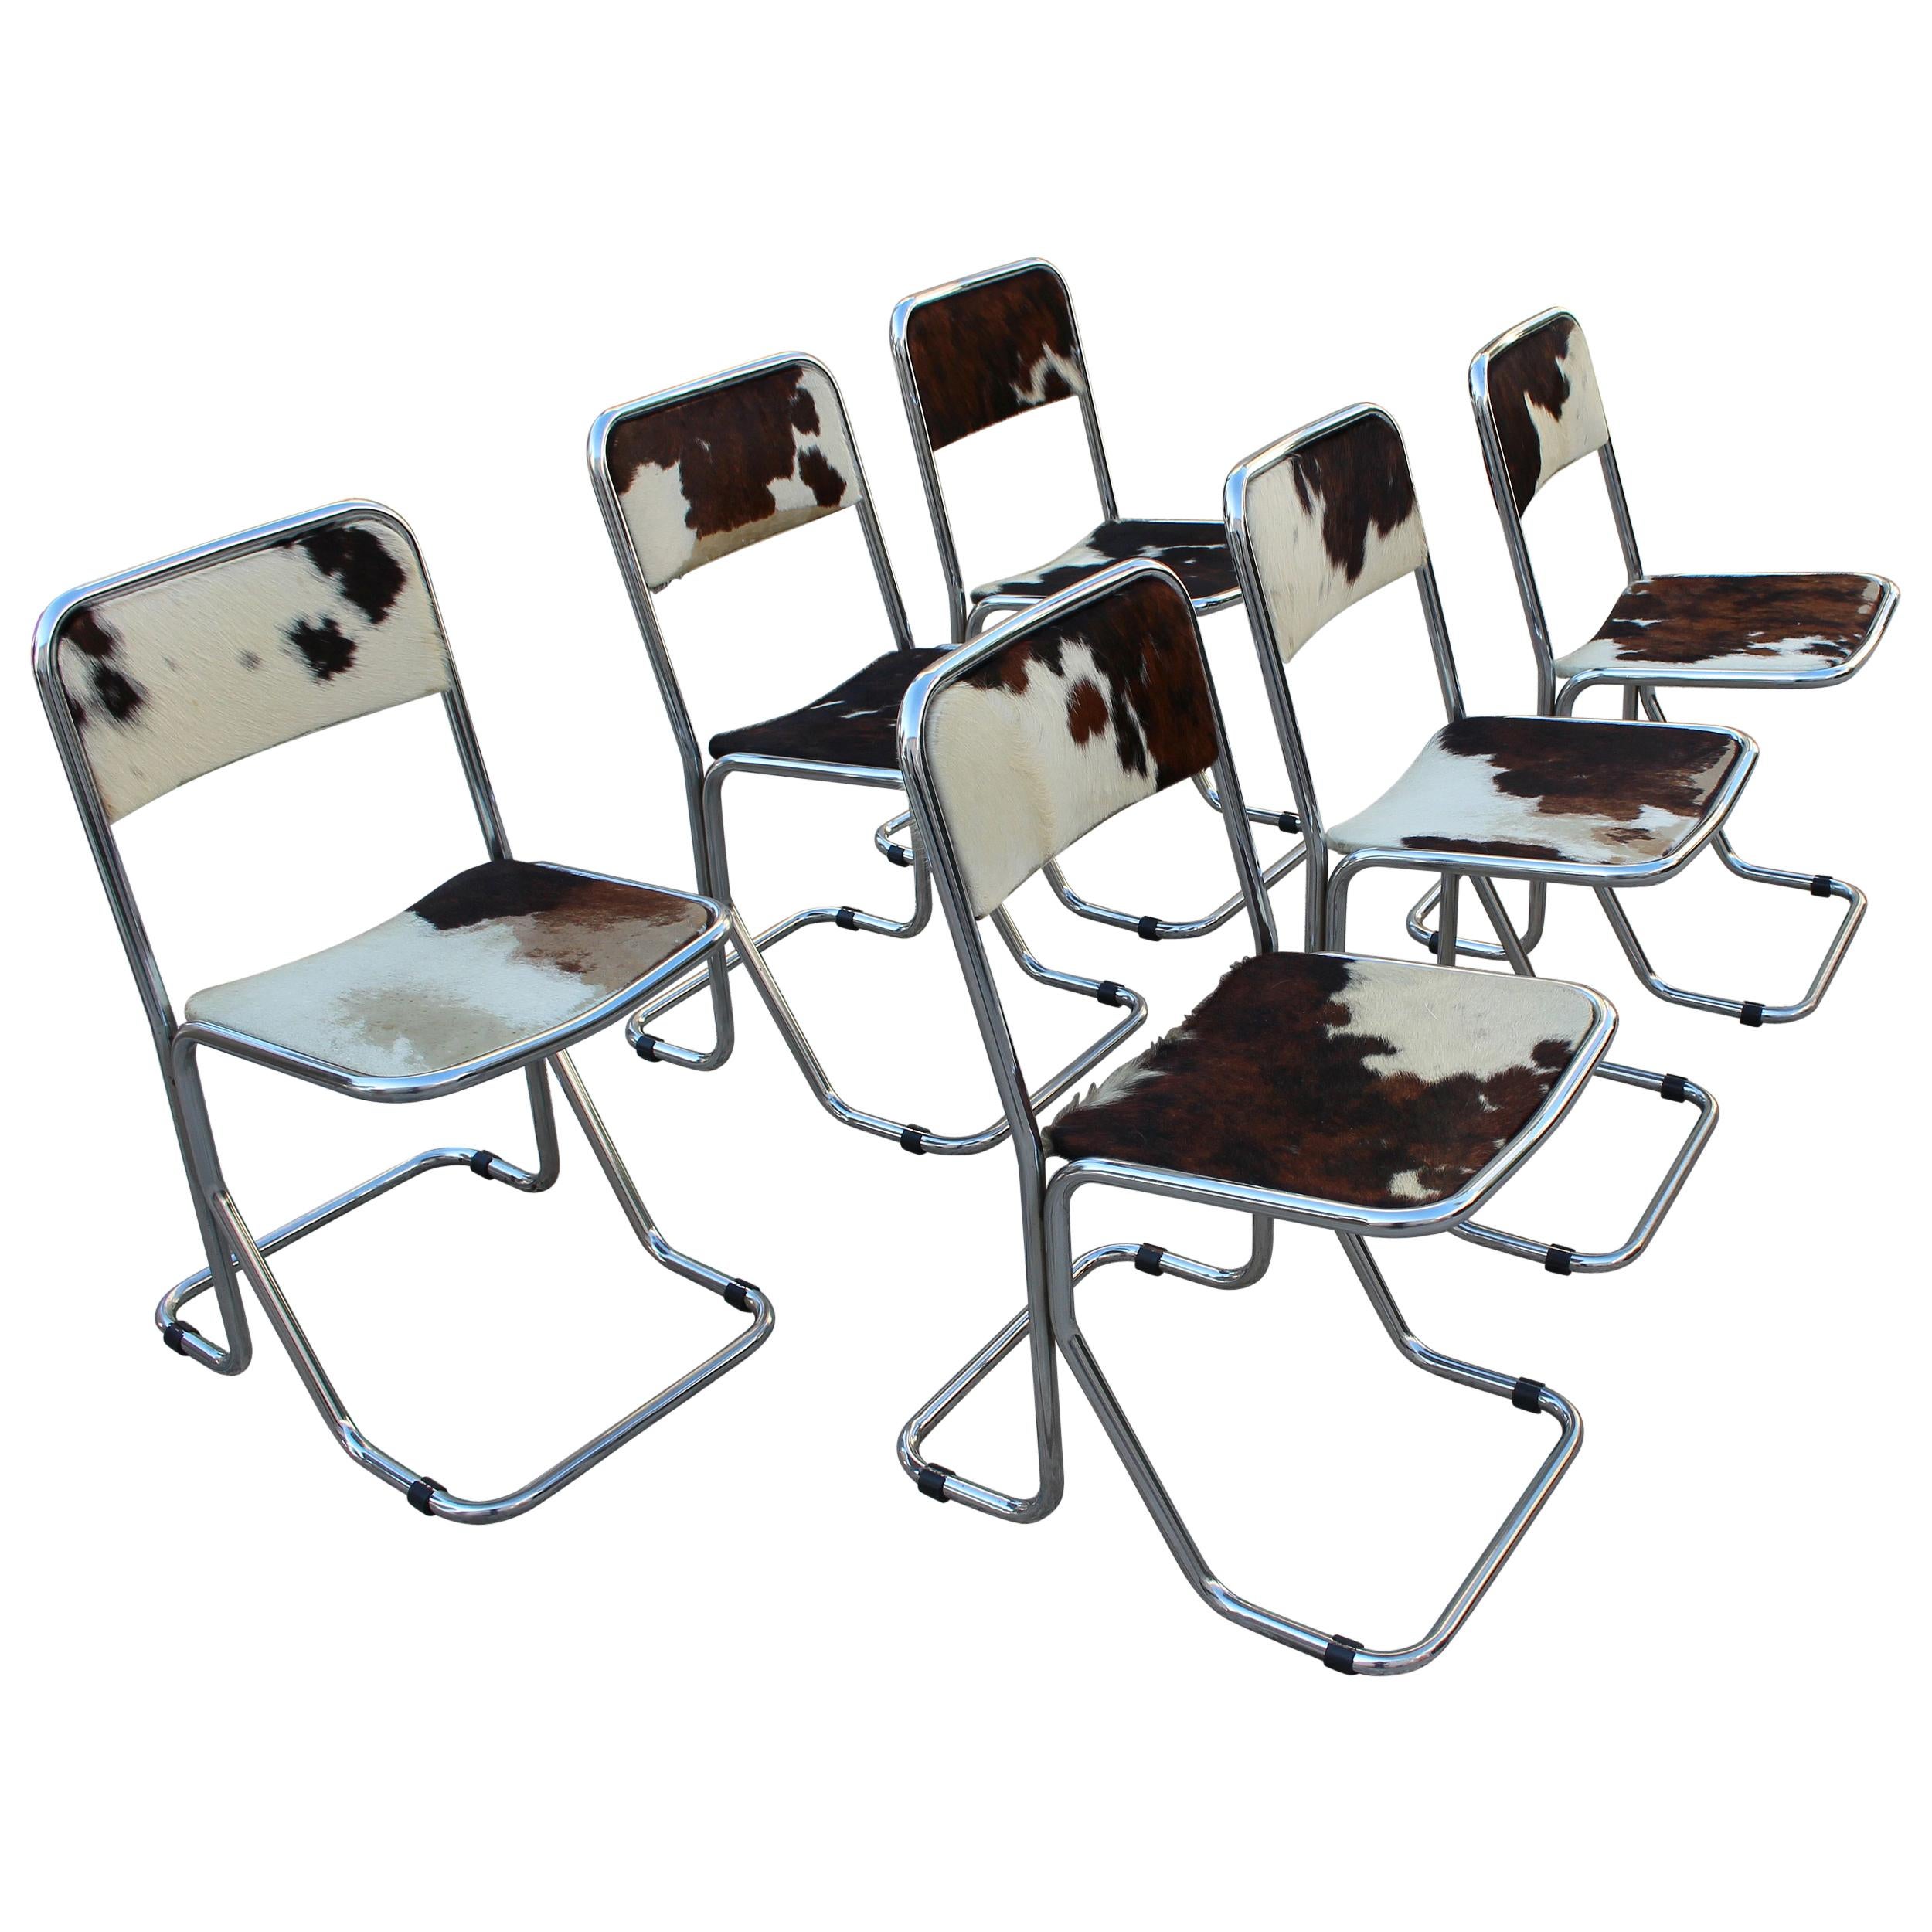 Swiss Mid-Century Modern Set of 6 Chairs